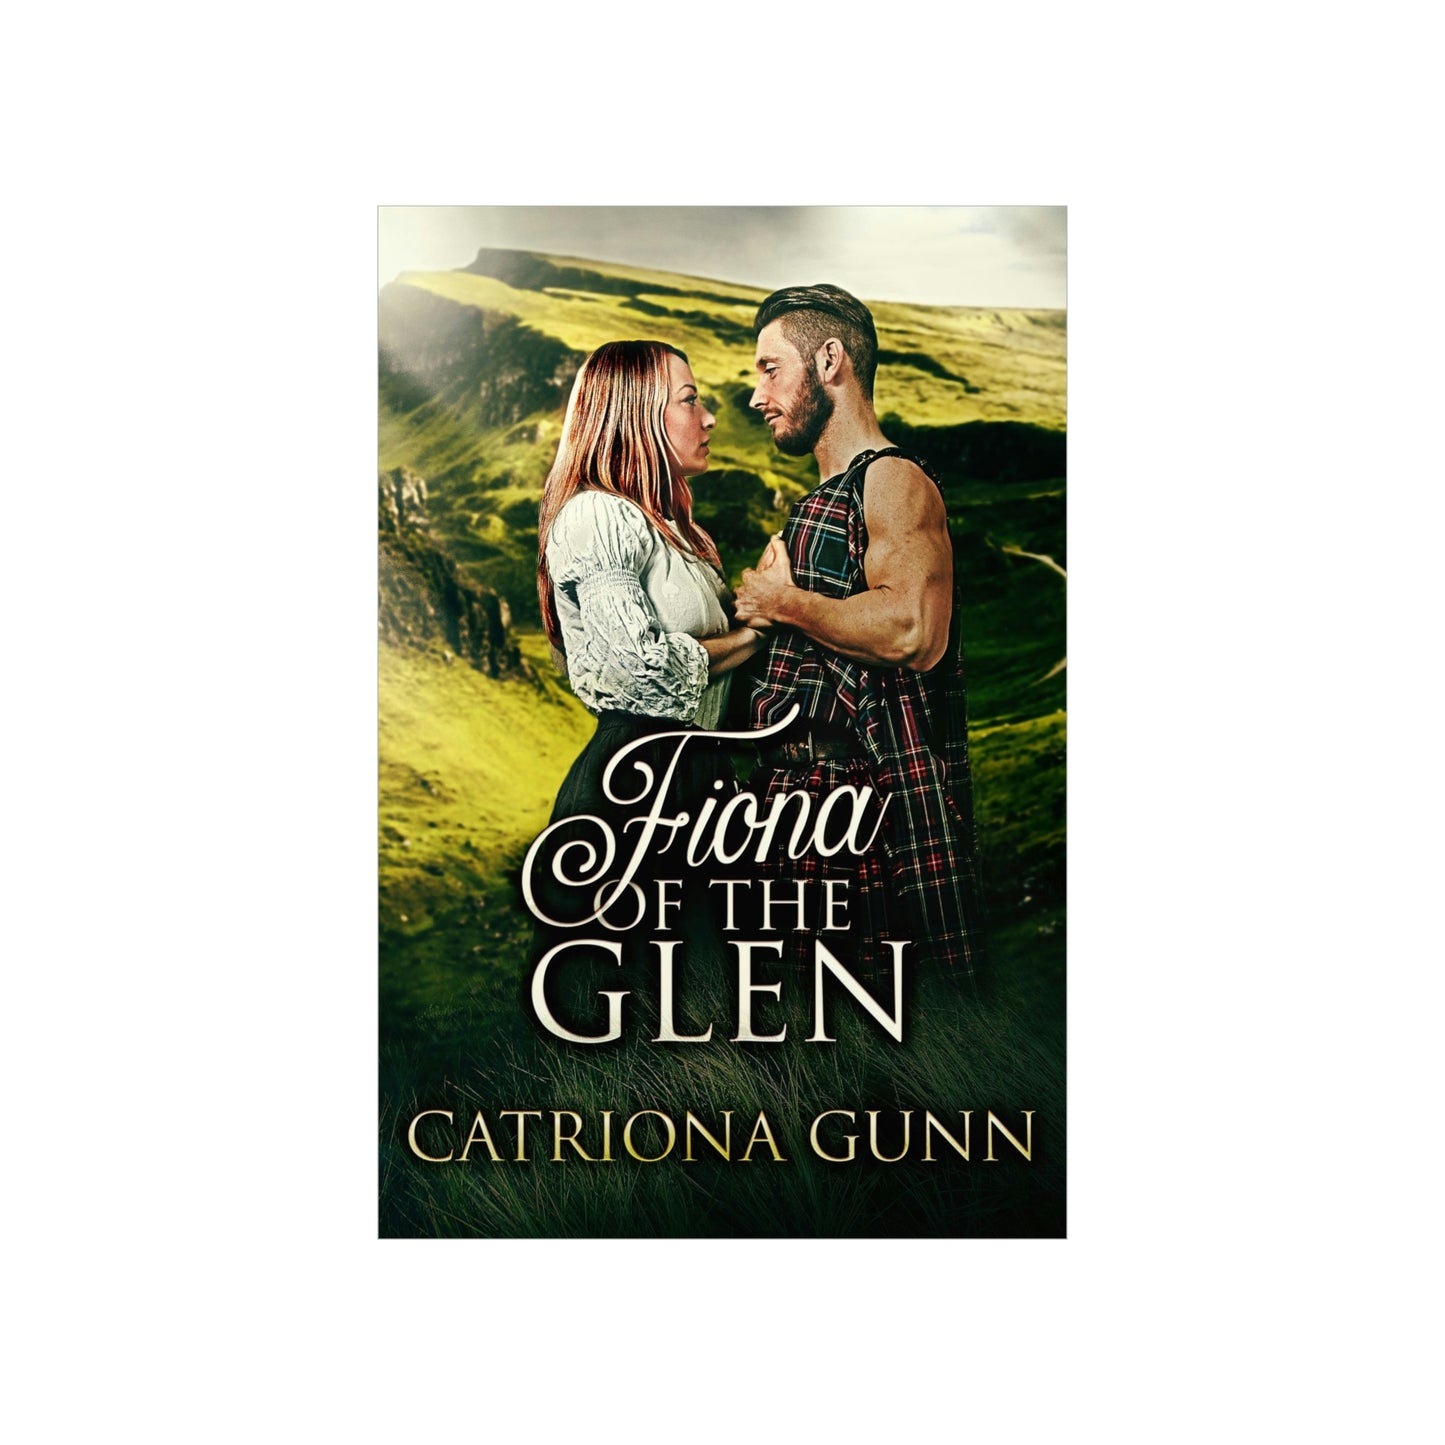 Fiona Of The Glen - Matte Poster